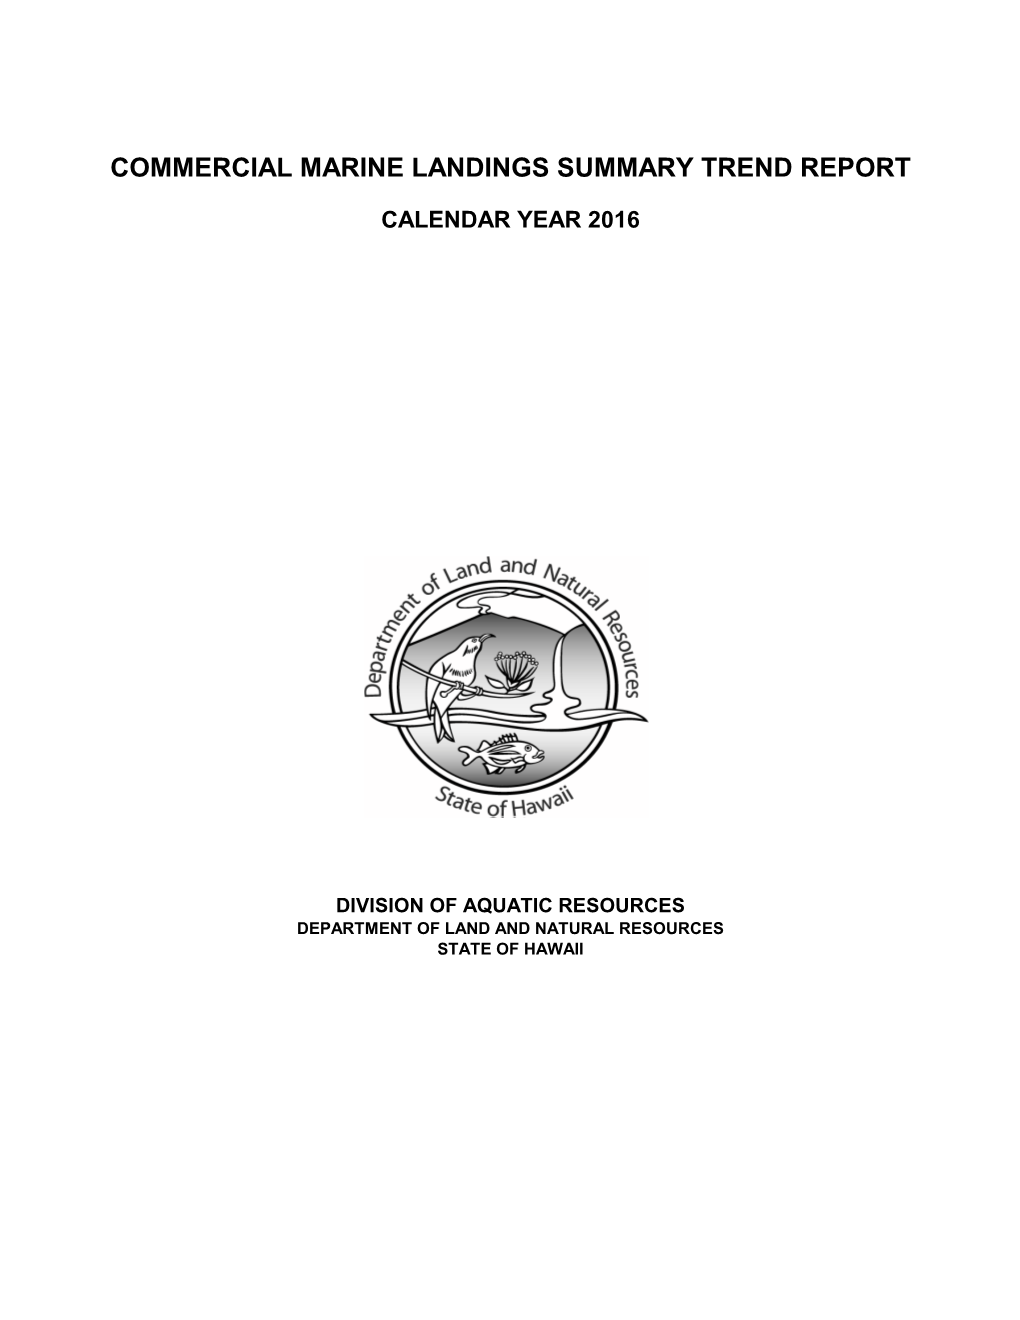 Commercial Marine Landings Summary Trend Report